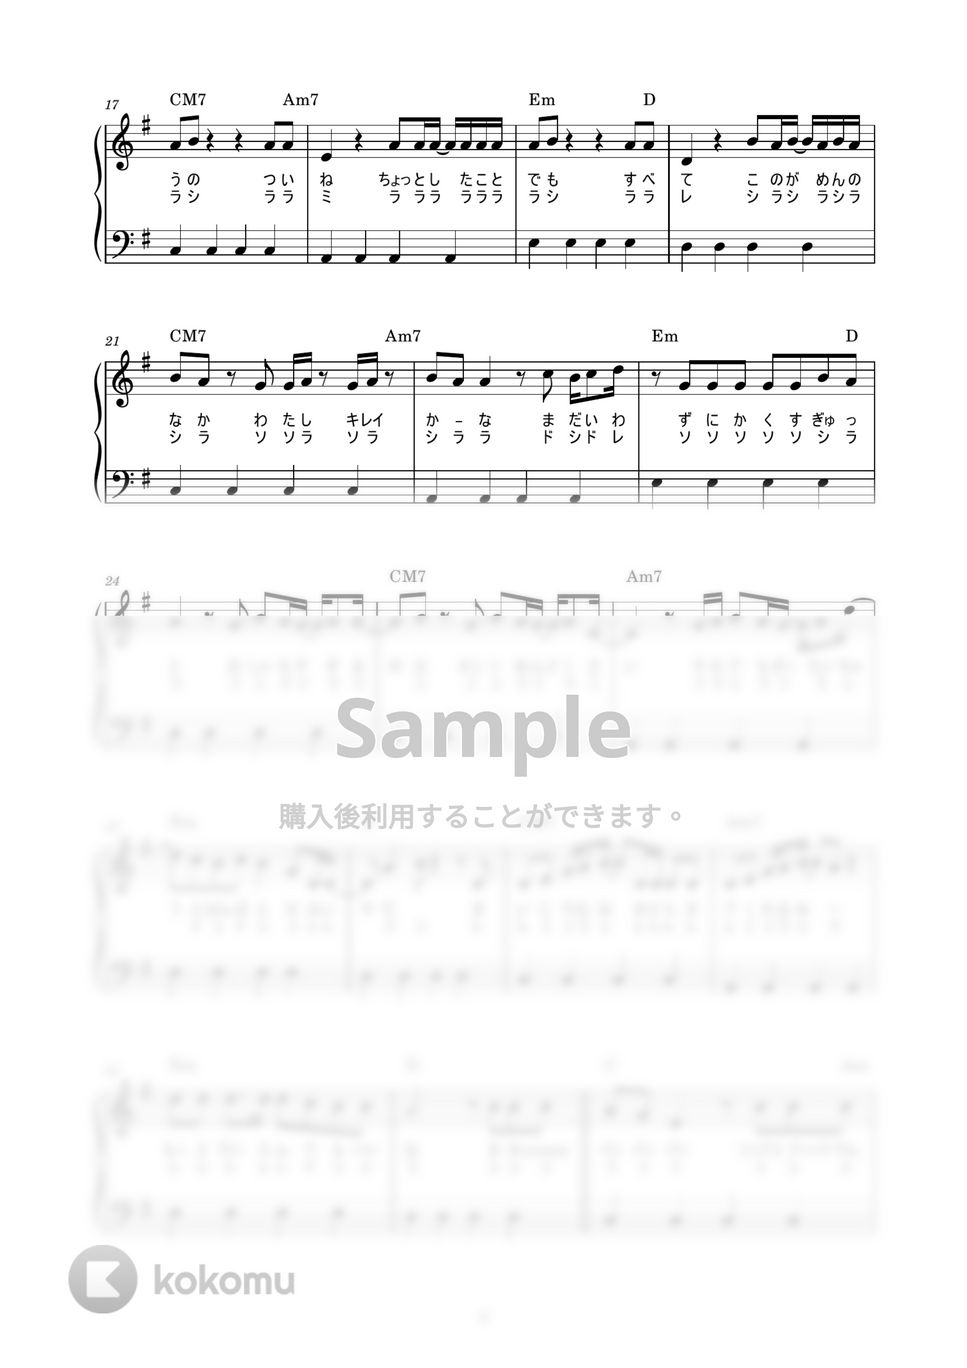 TWICE - LIKEY (かんたん / 歌詞付き / ドレミ付き / 初心者) by piano.tokyo